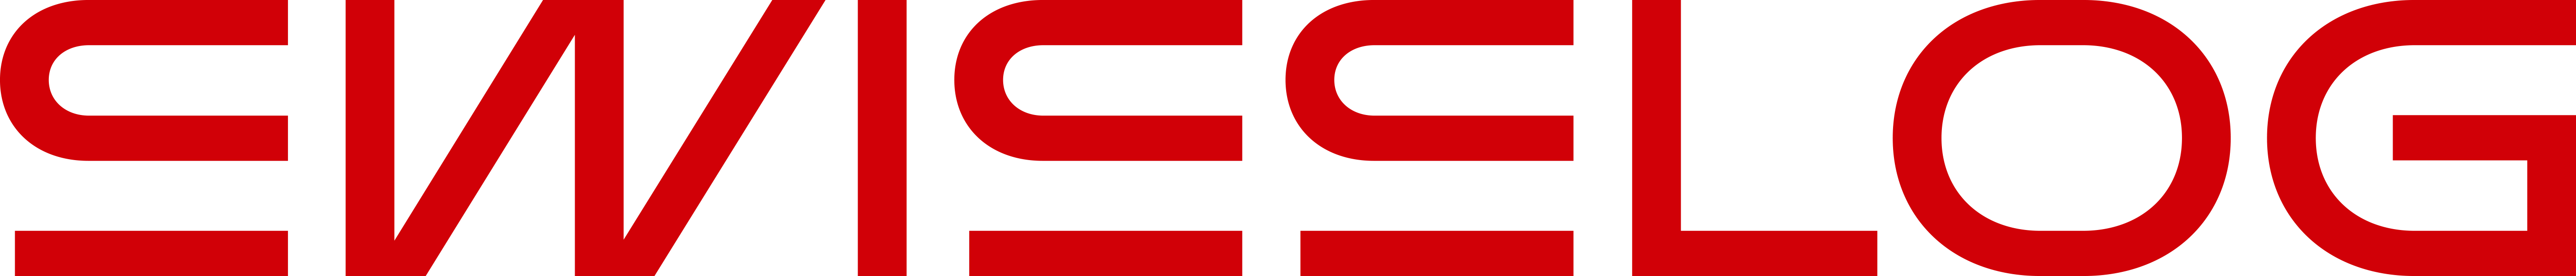 Swisslog_logo-one-line_red_rgb.png